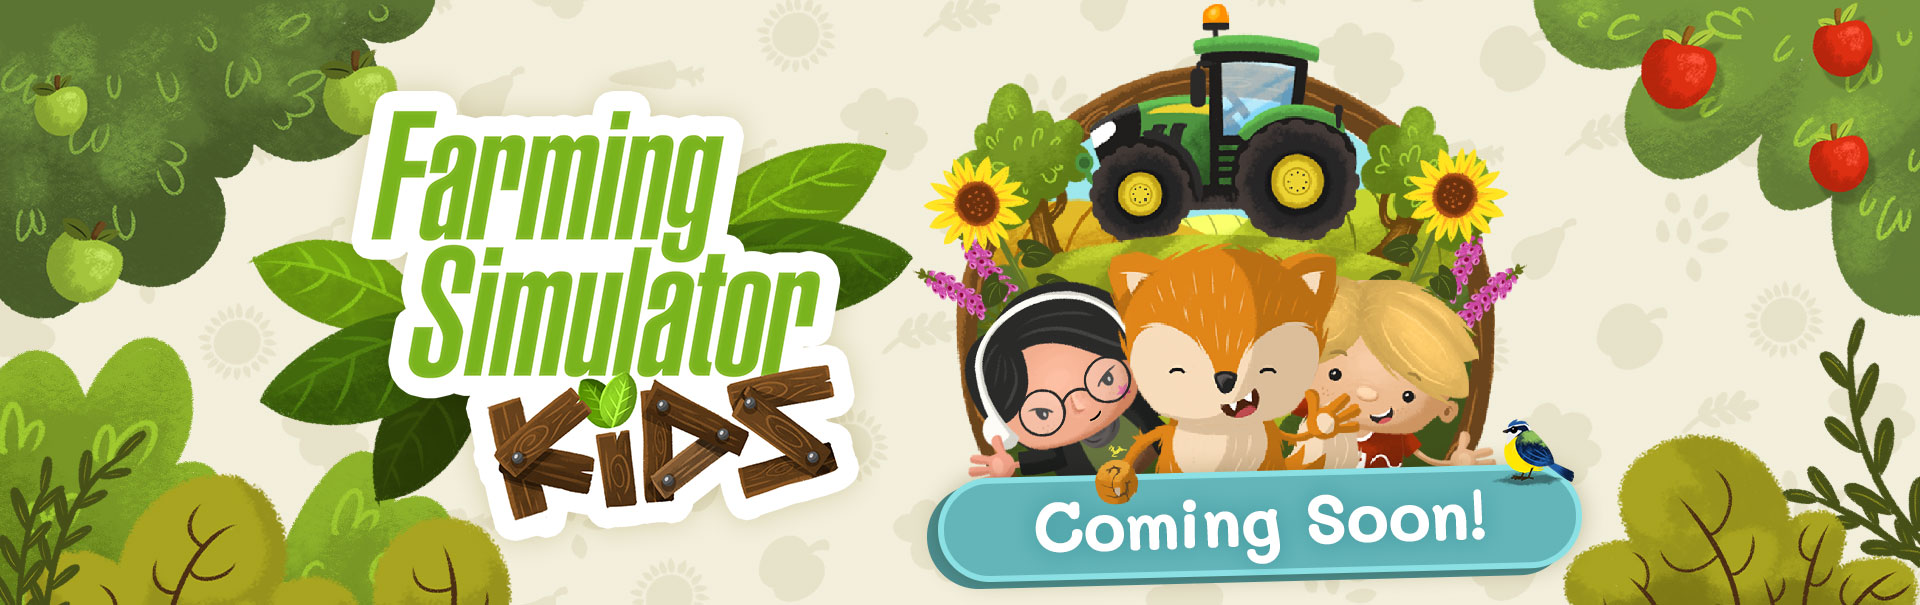 Farming Simulator Kids - Announcement